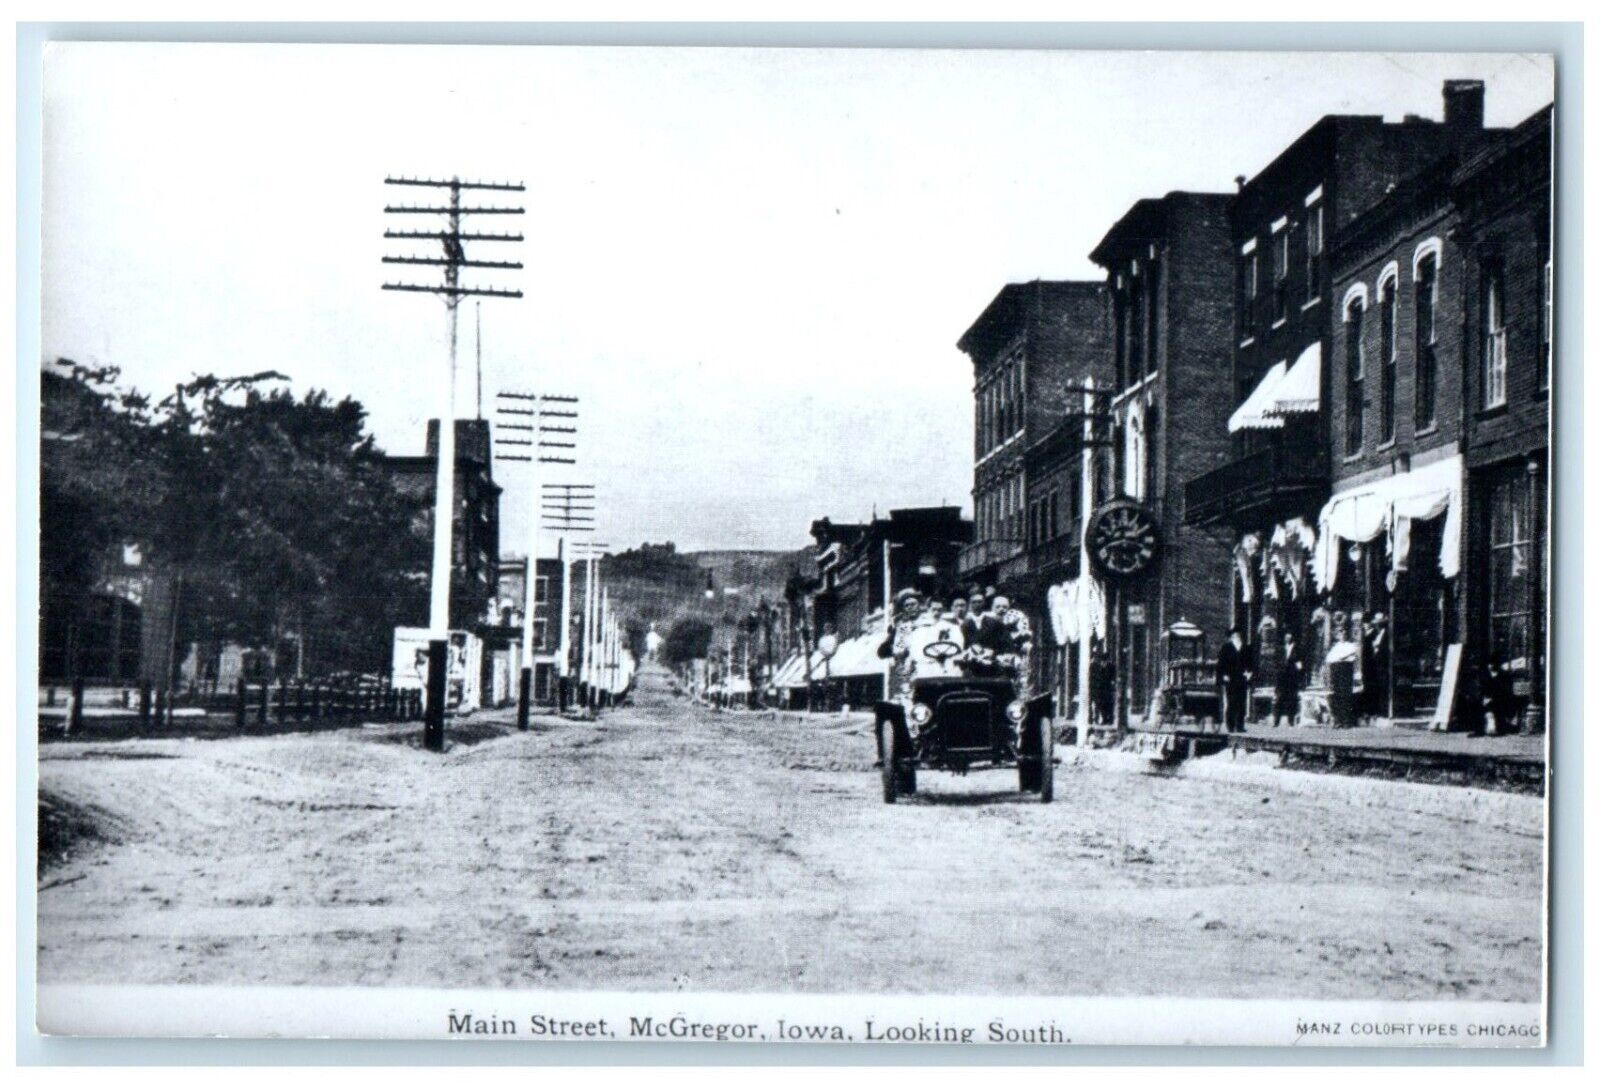 c1940 Main Street Classic Car McGregor Iowa Looking South Vintage Photo Postcard